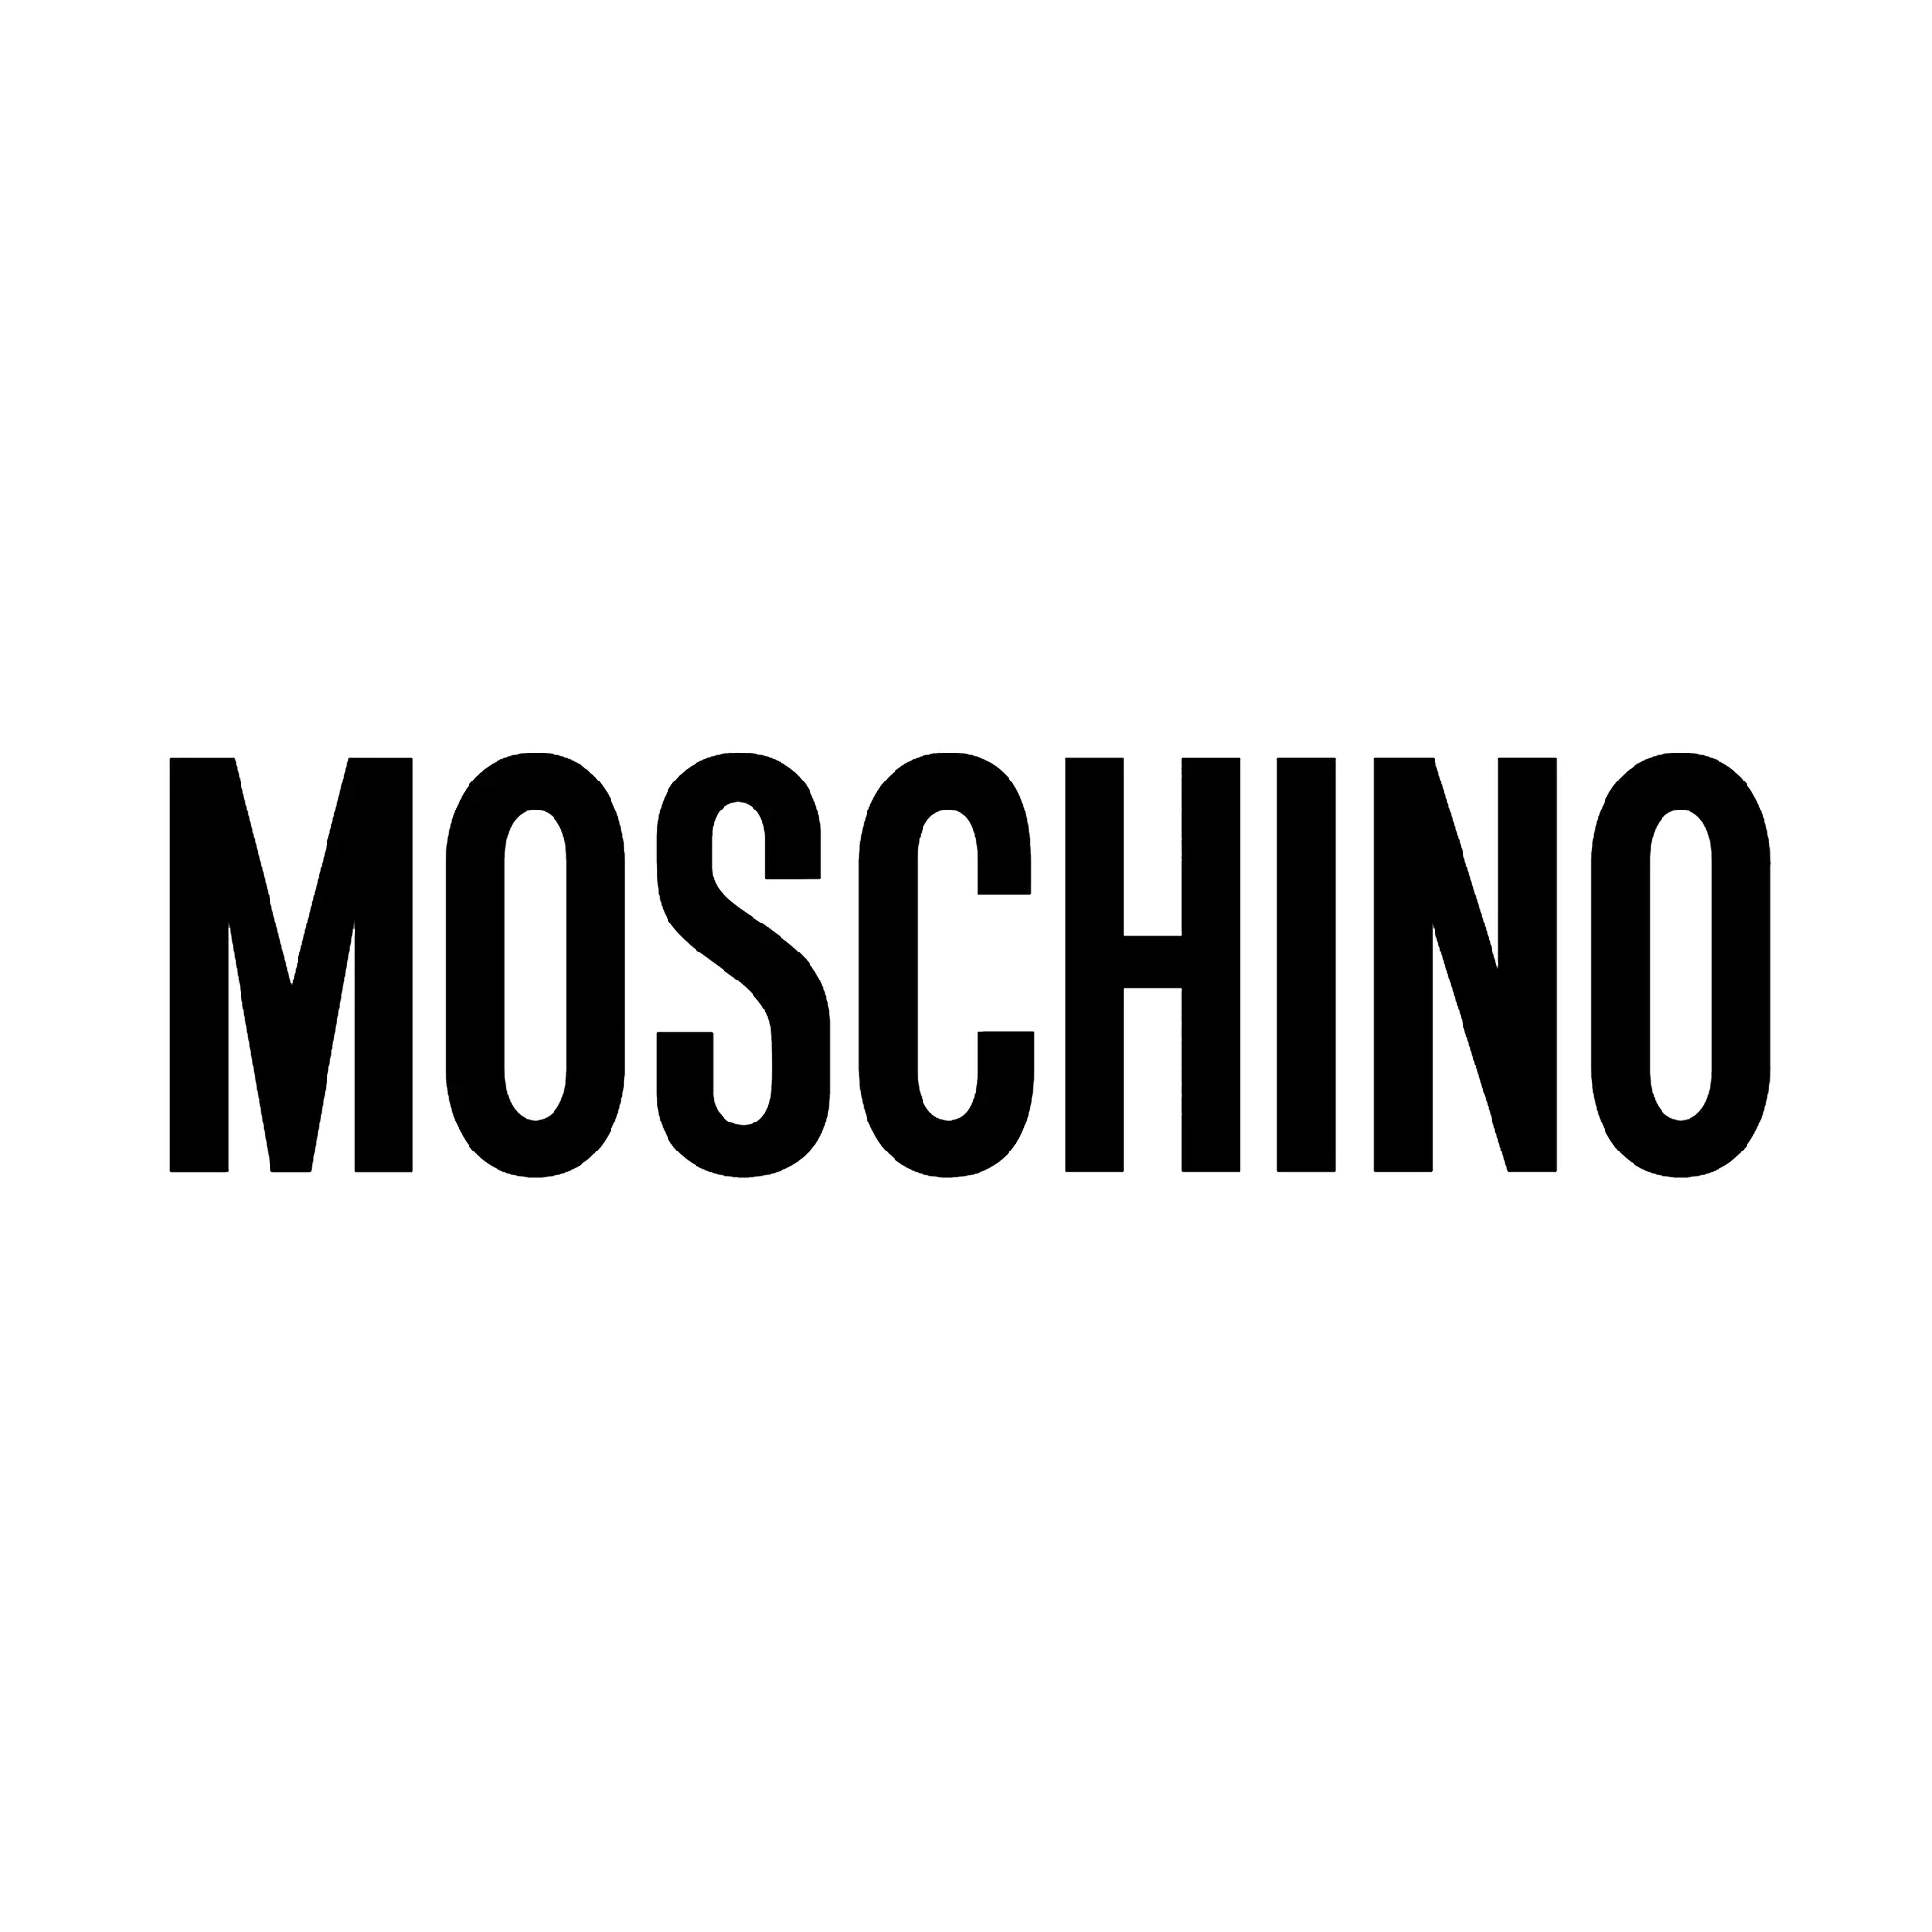 Moschino UOMO EDT | Femme Fatale - Femme Fatale - 